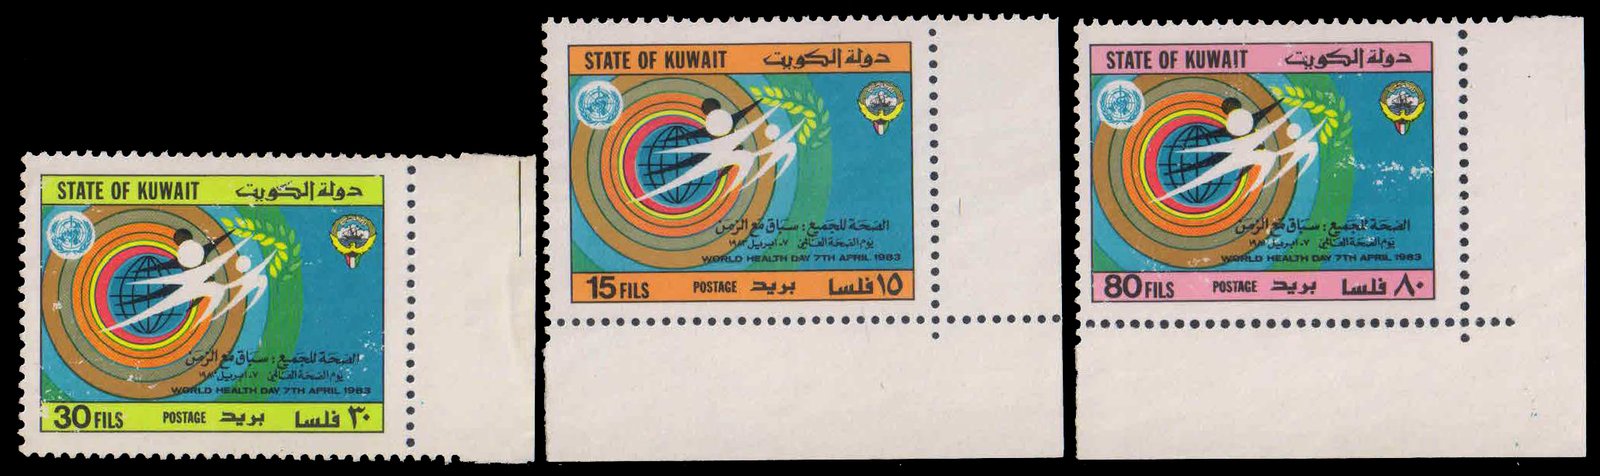 KUWAIT 1983-World Health Day, Figures, Medical, Exercising, Set of 3, MNH, S.G. 1003-05-Cat £ 7-